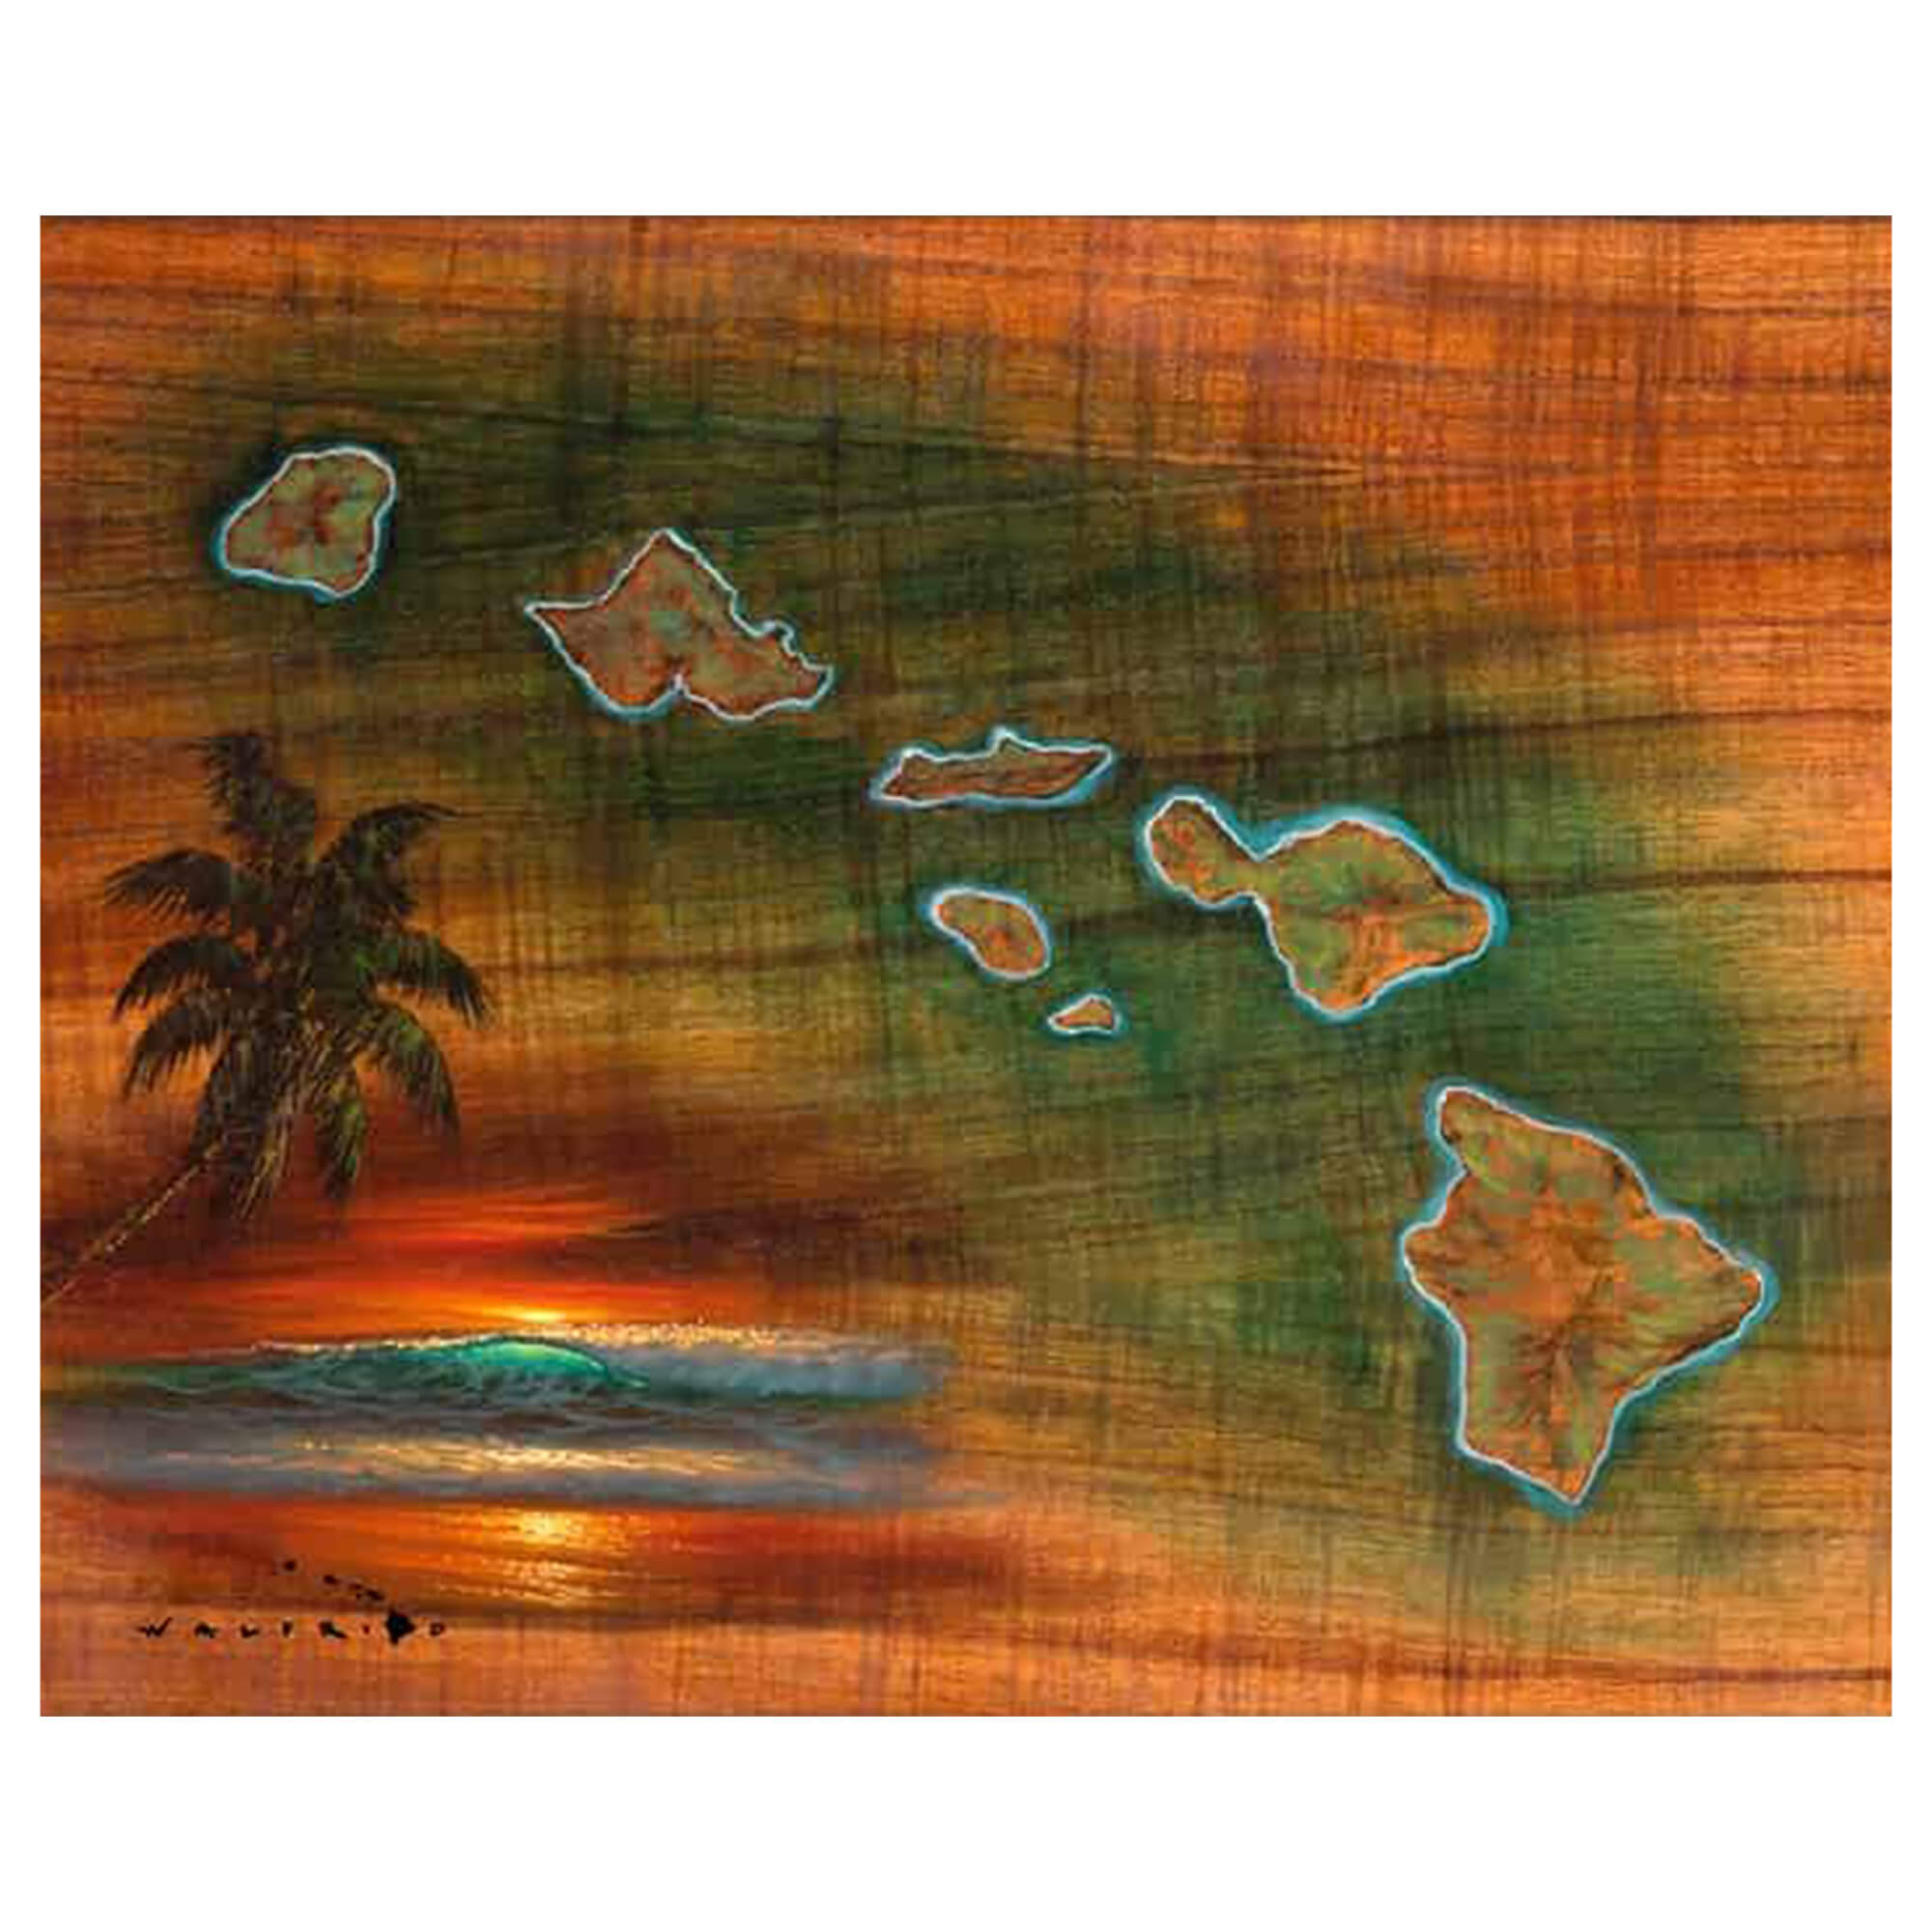 A matted art print of a map of the Hawaiian Islands on Koa wood grain by Hawaii artist Walfrido Garcia